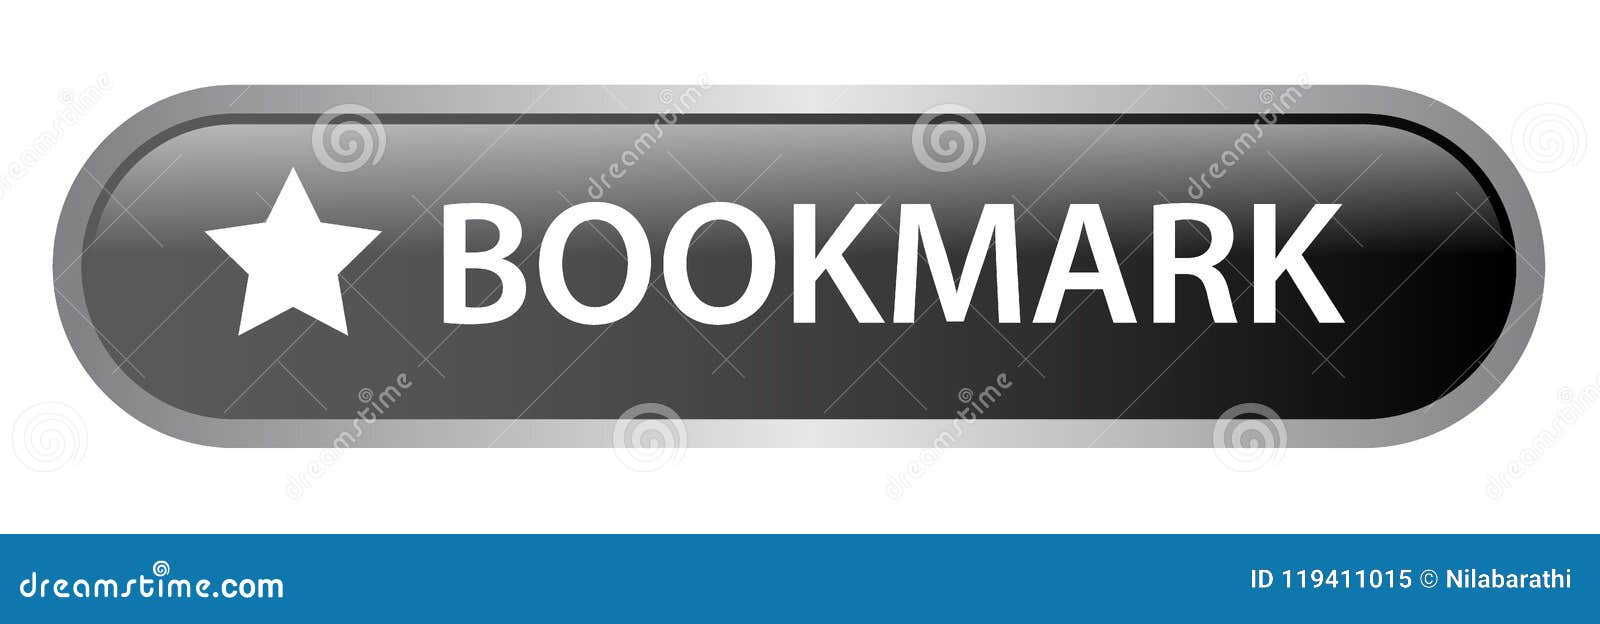 Bookmark Web Button Stock Illustration Illustration Of Icons 119411015